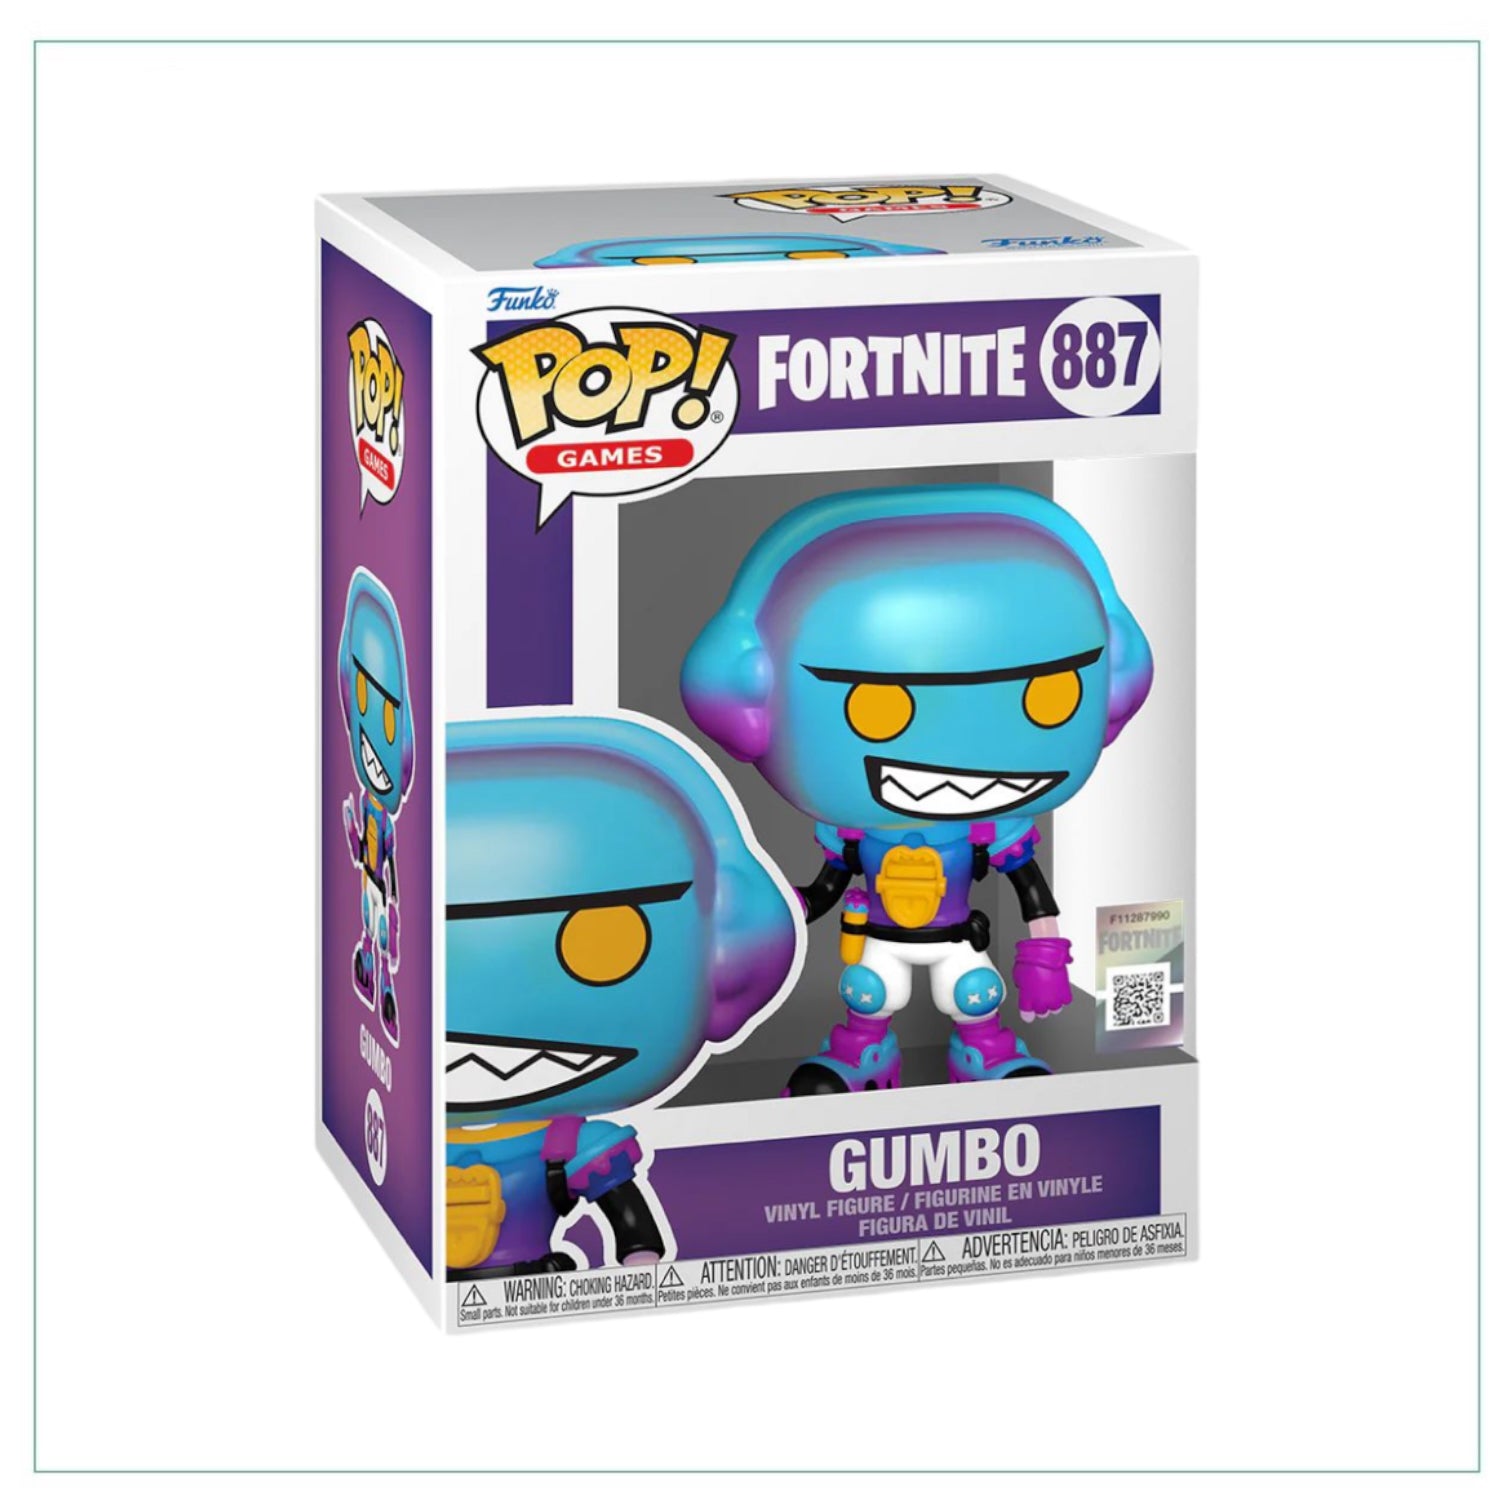 Gumbo #887 Funko Pop! Fortnite